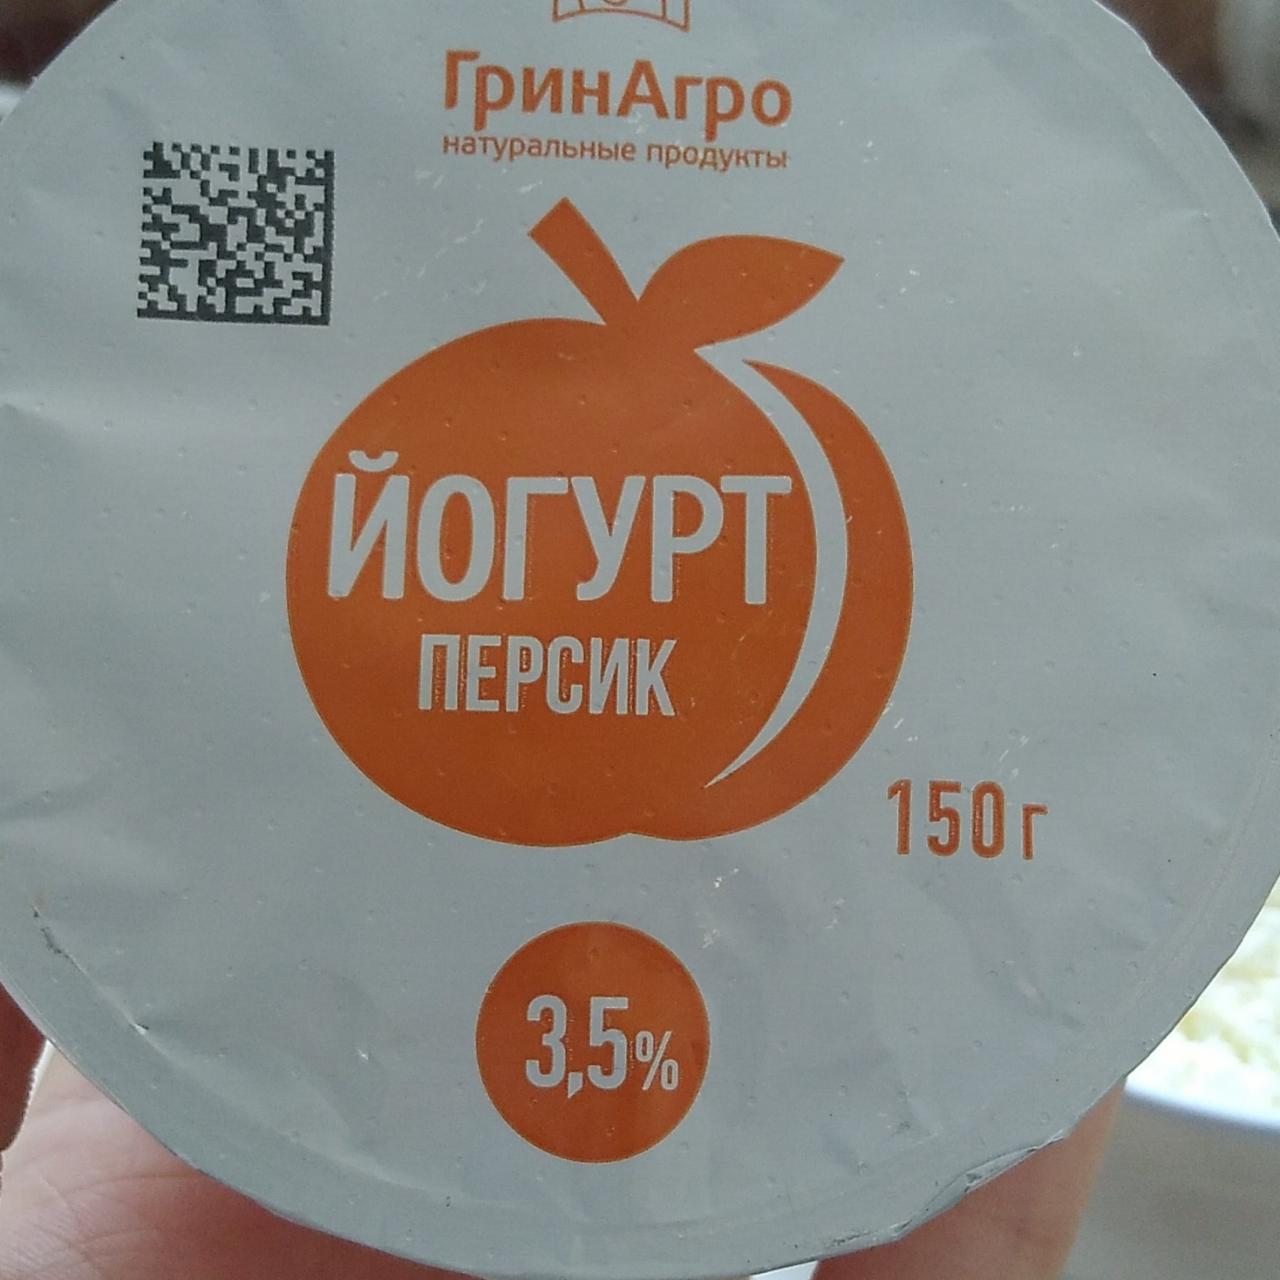 Фото - Йогурт персик 3.5% Гринагро